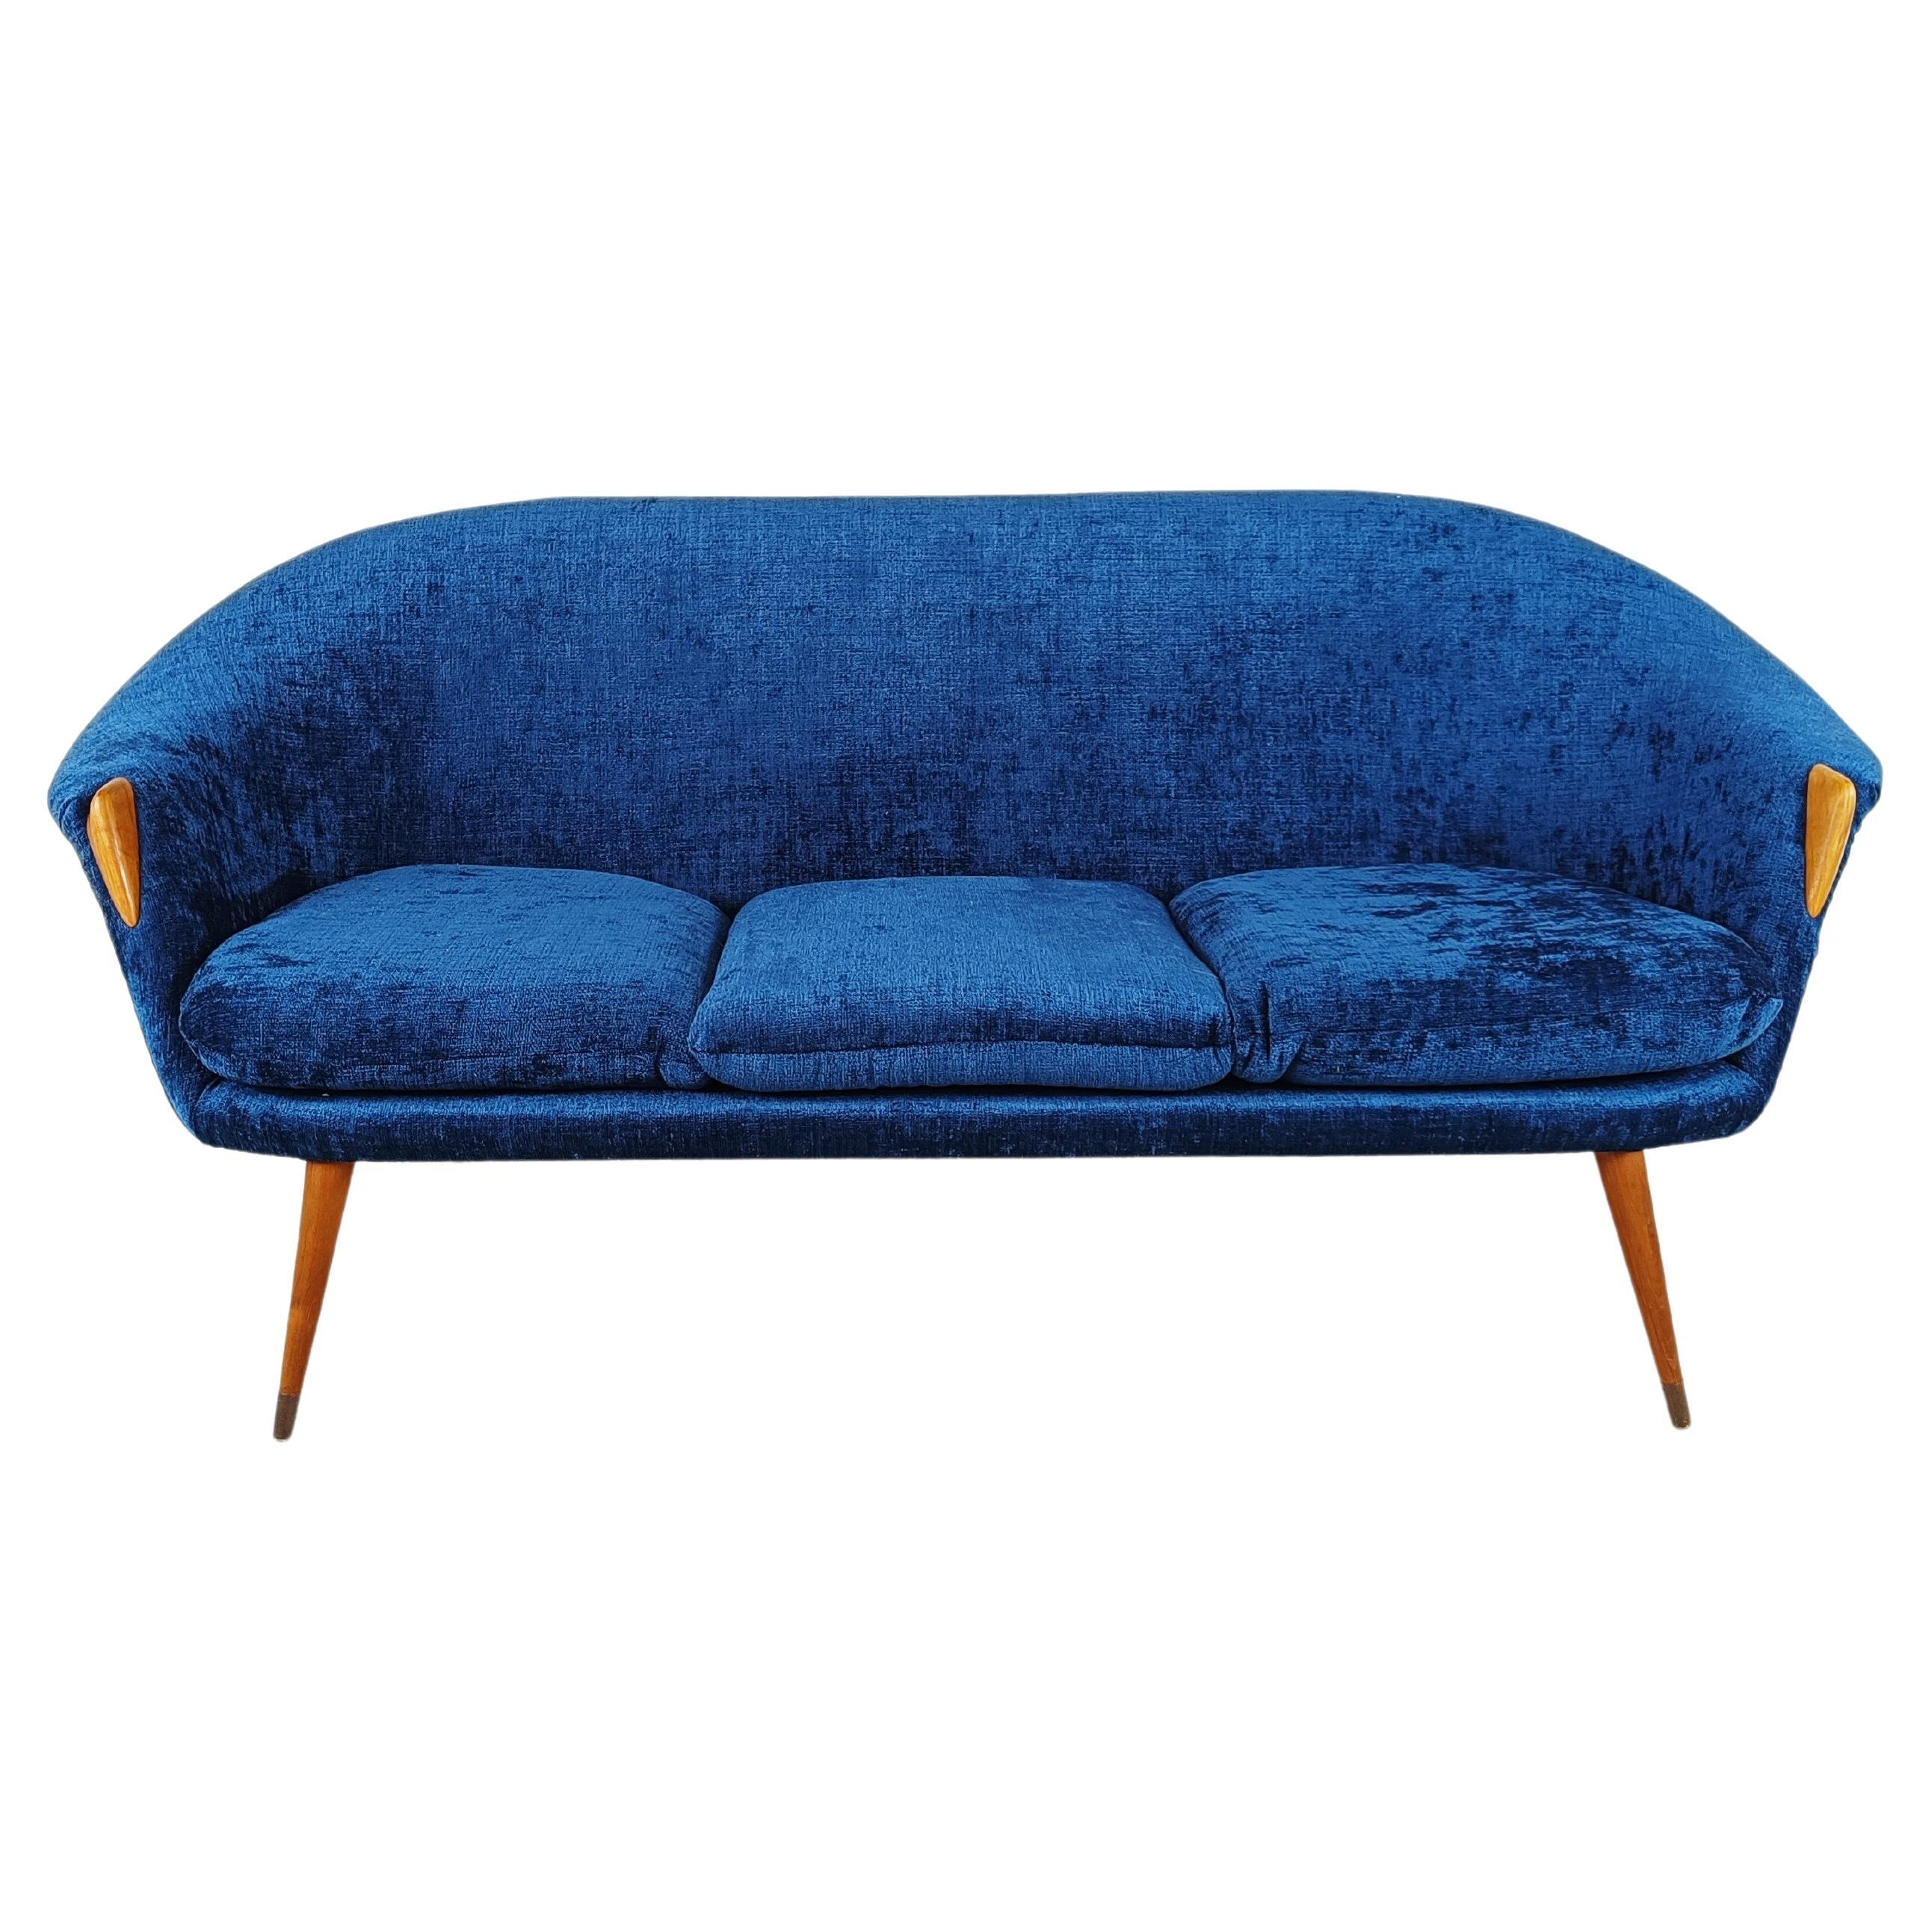 Mid-Century-Sofa, Nanna Ditzel zugeschrieben, 1950er-Jahre